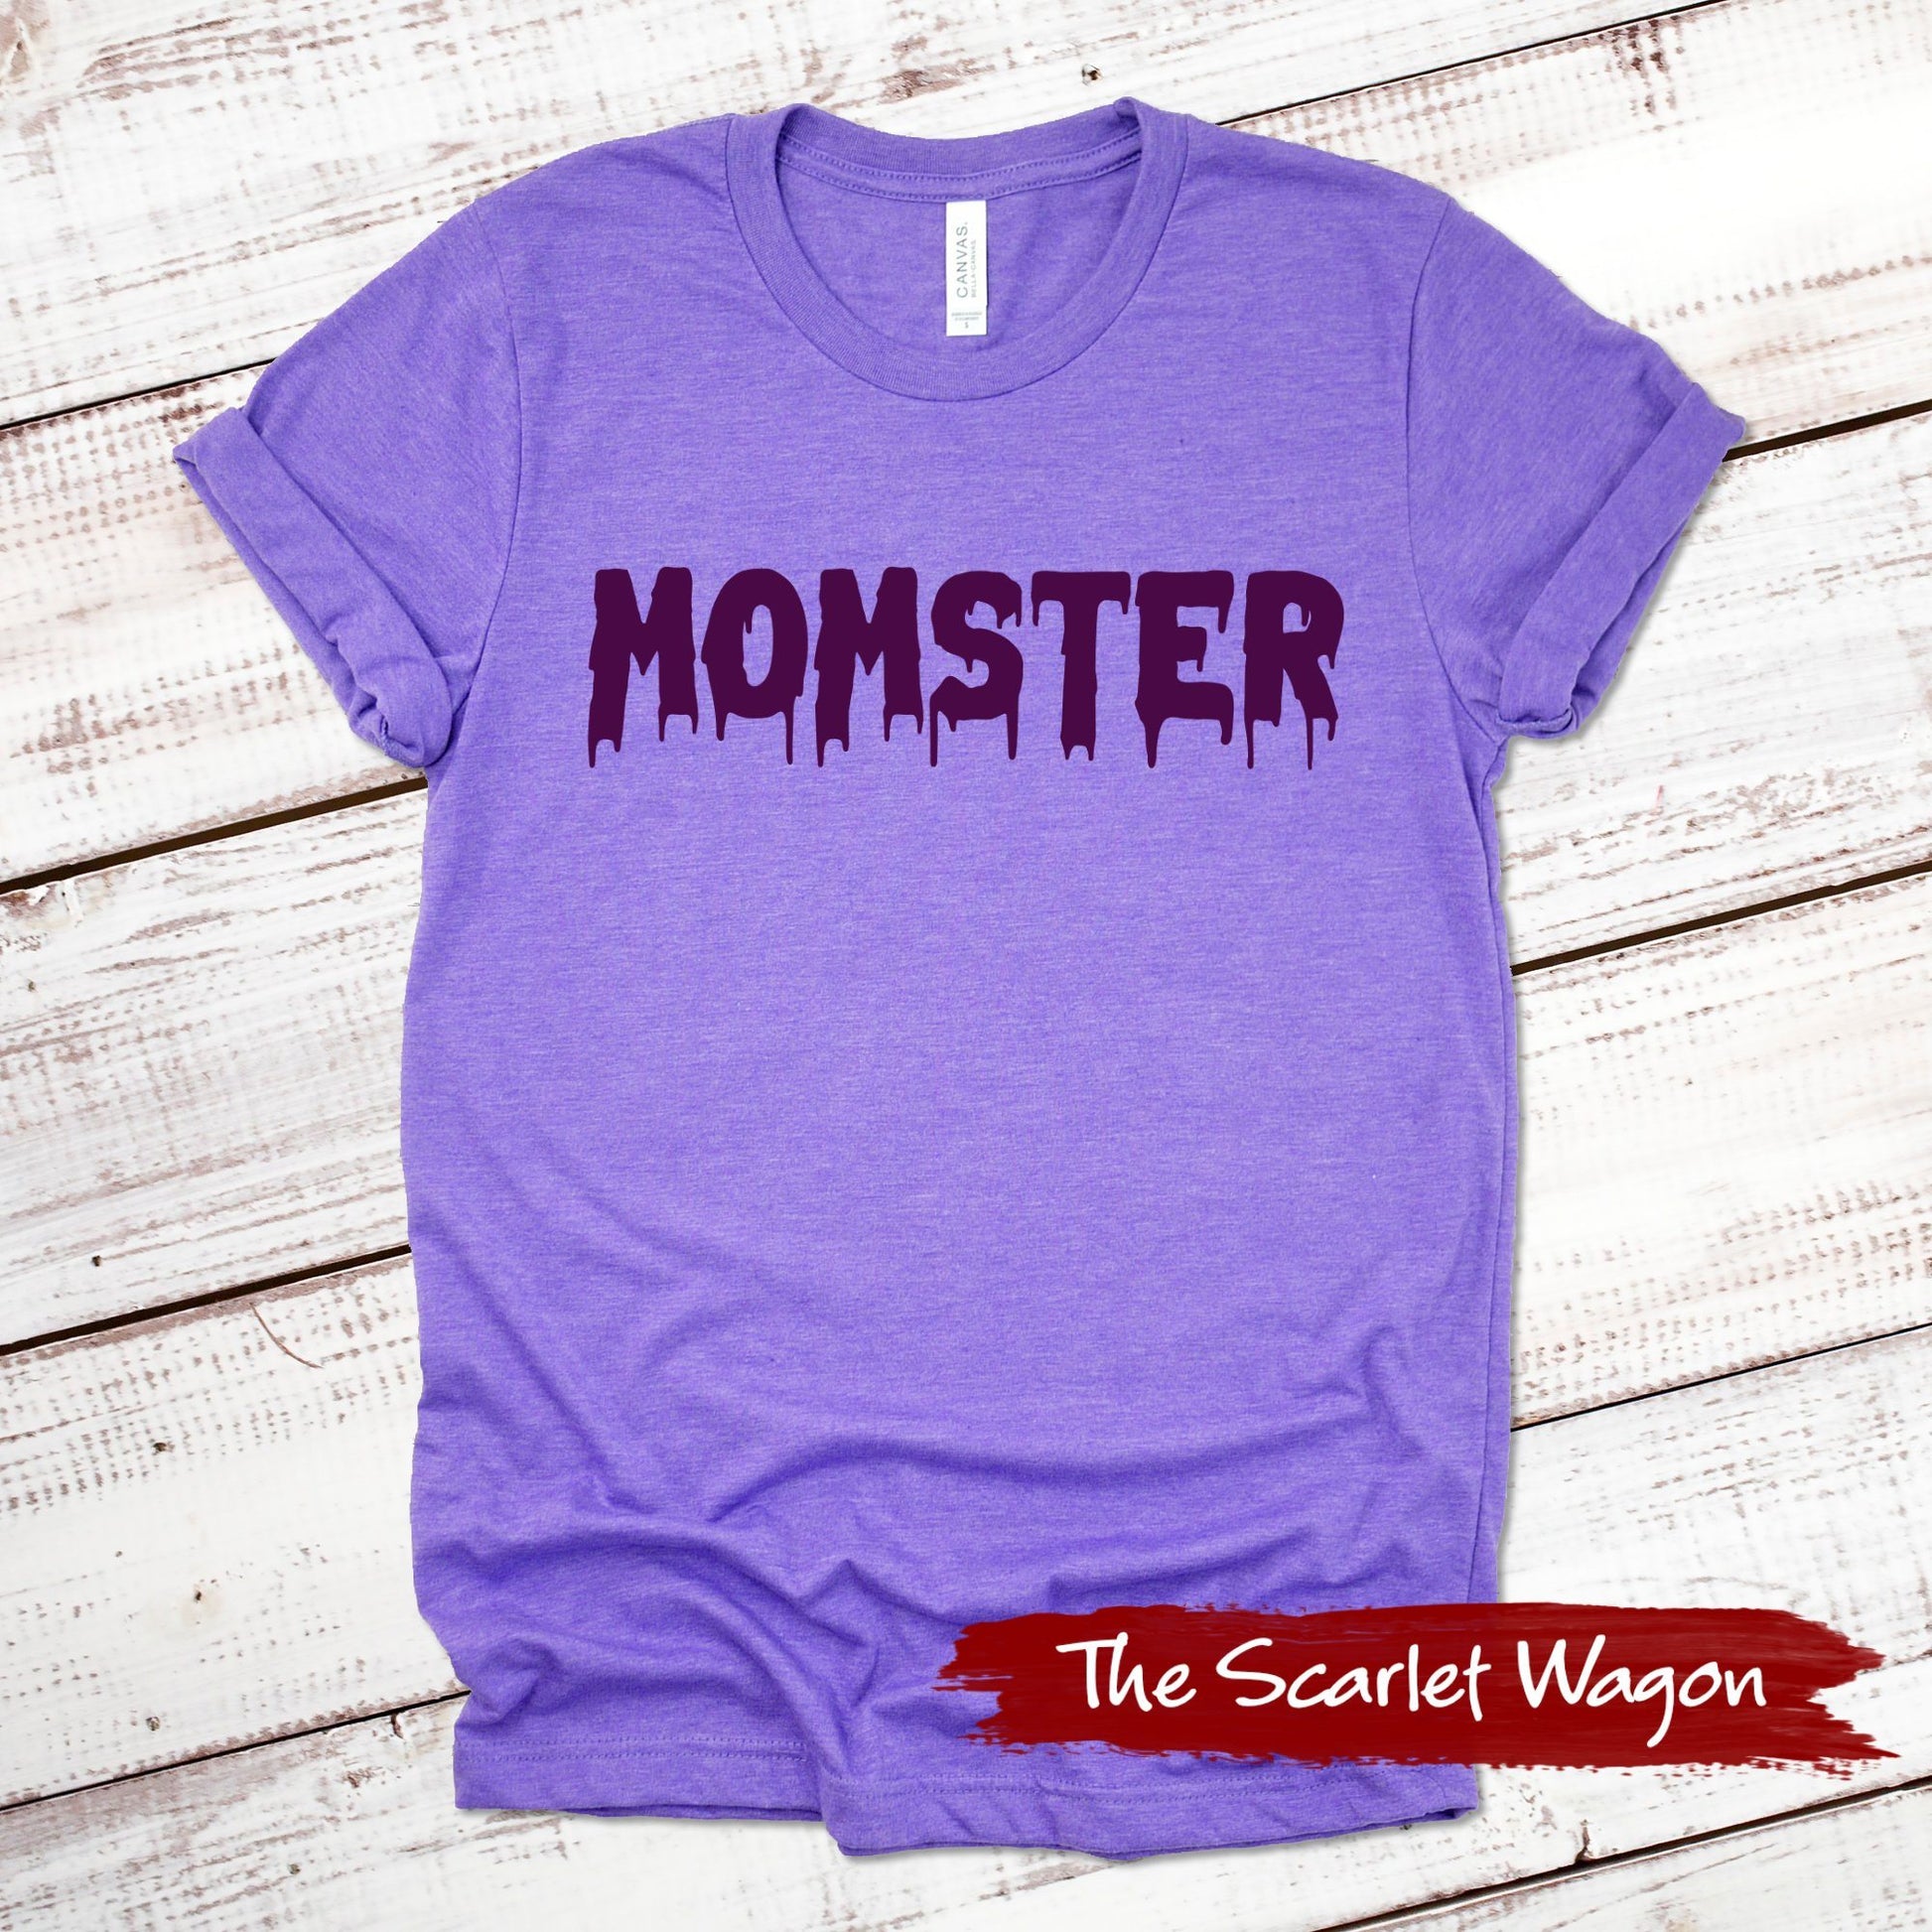 Momster Halloween Shirt Scarlet Wagon Heather Purple XS 